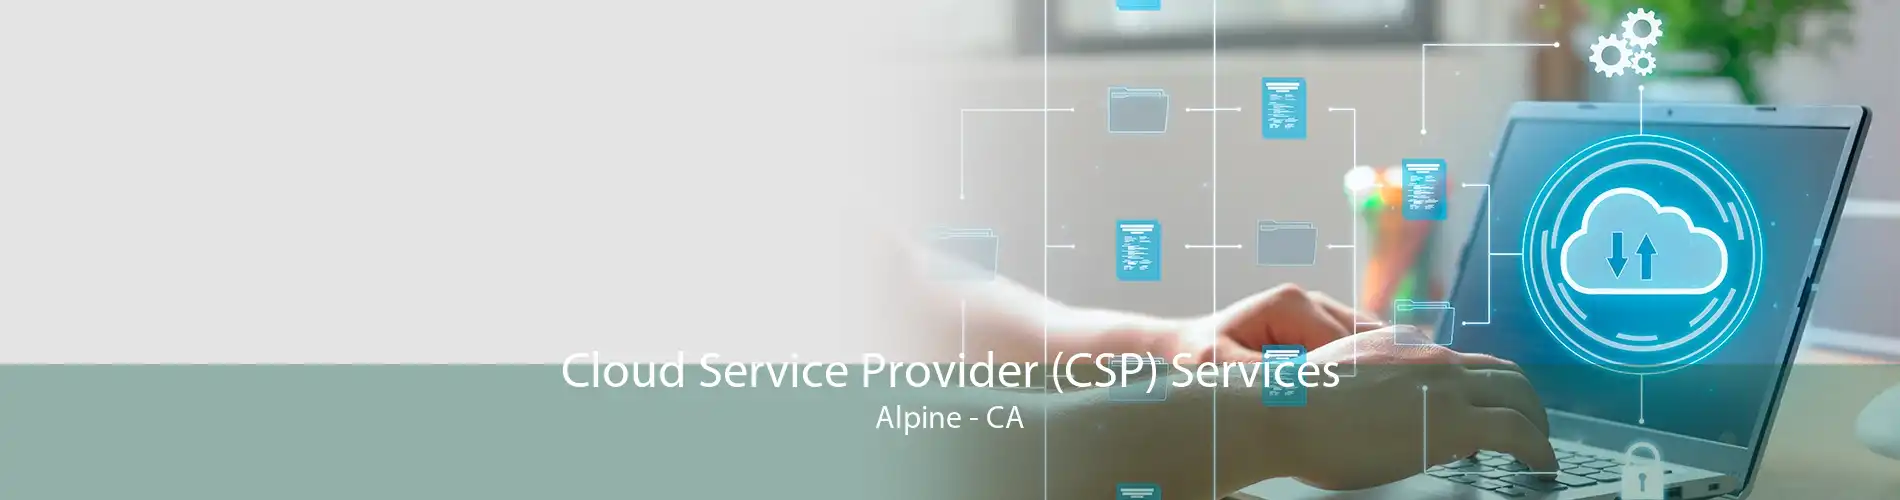 Cloud Service Provider (CSP) Services Alpine - CA